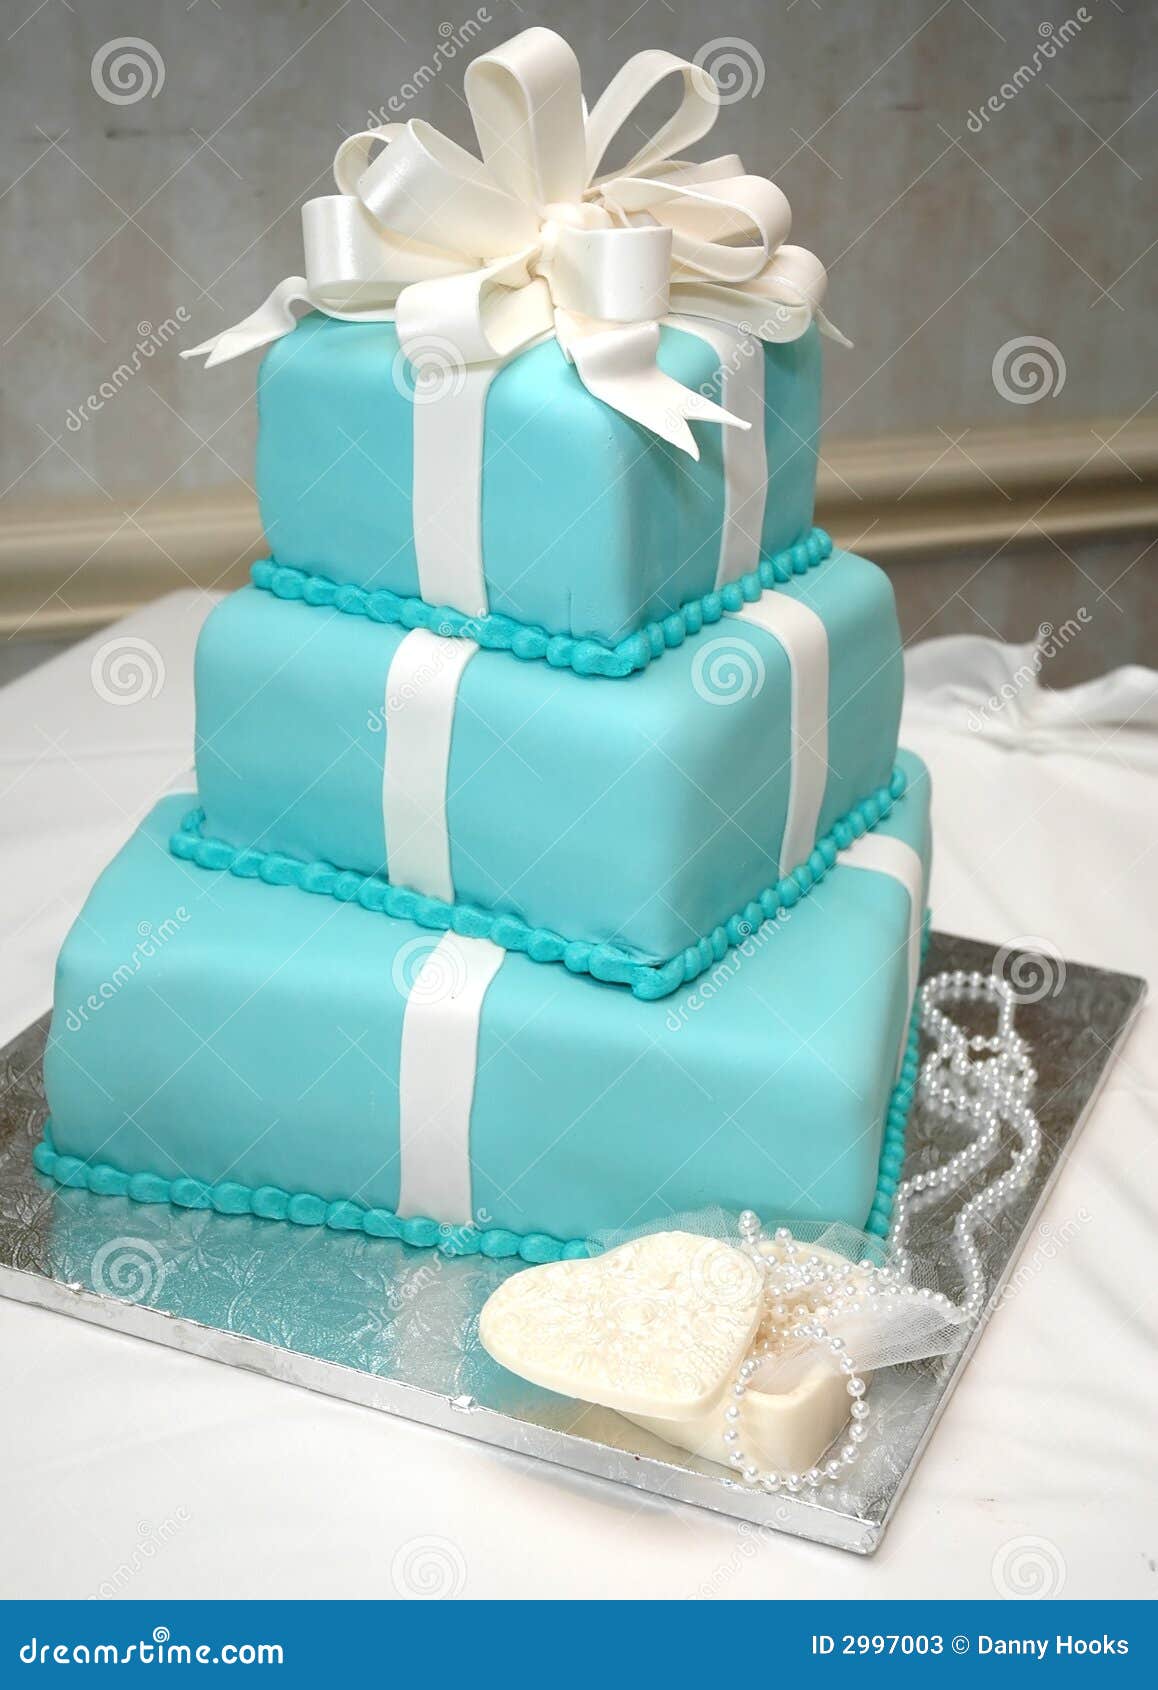 Indian Jewellery cake | Indian cake, Cake designs birthday, New cake design